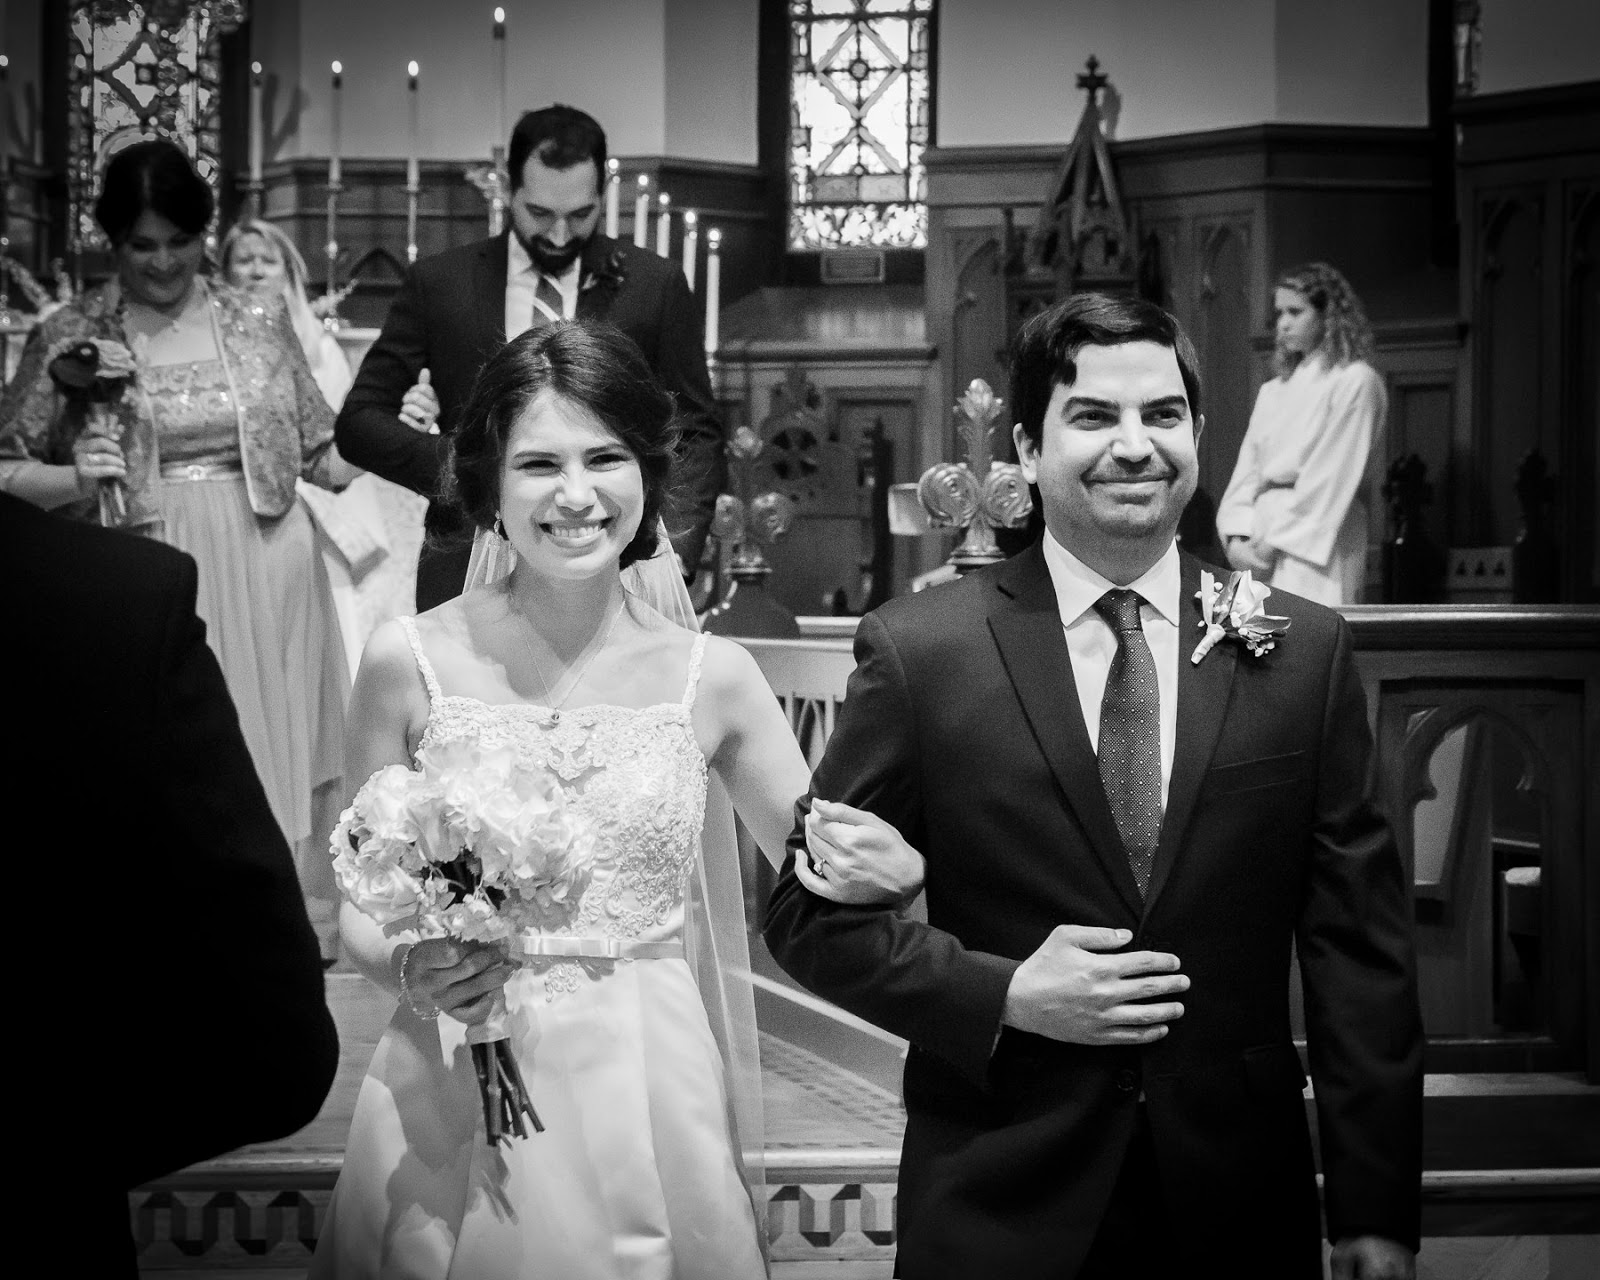 Wedding photos by floresita